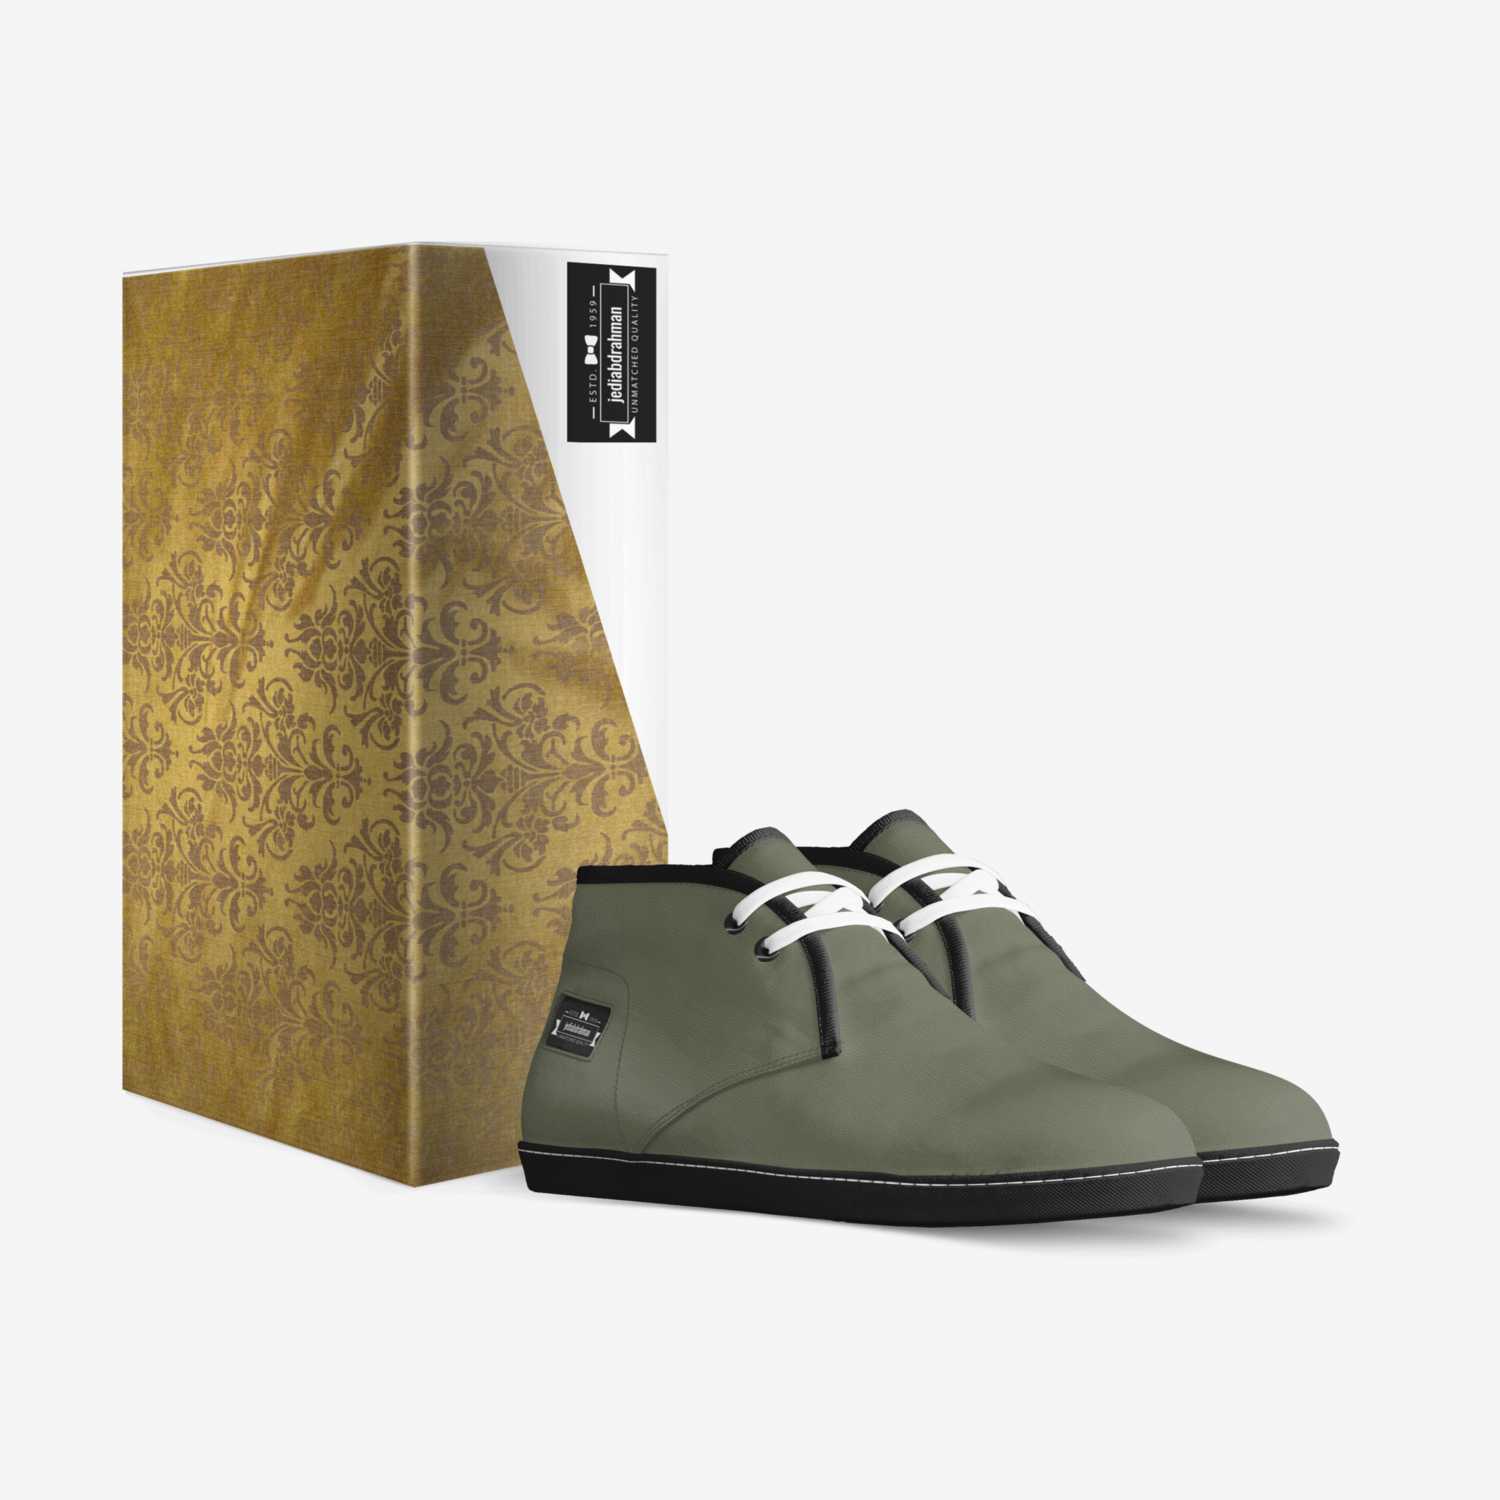 jedi custom made in Italy shoes by Zaidi Abdul Rahman | Box view